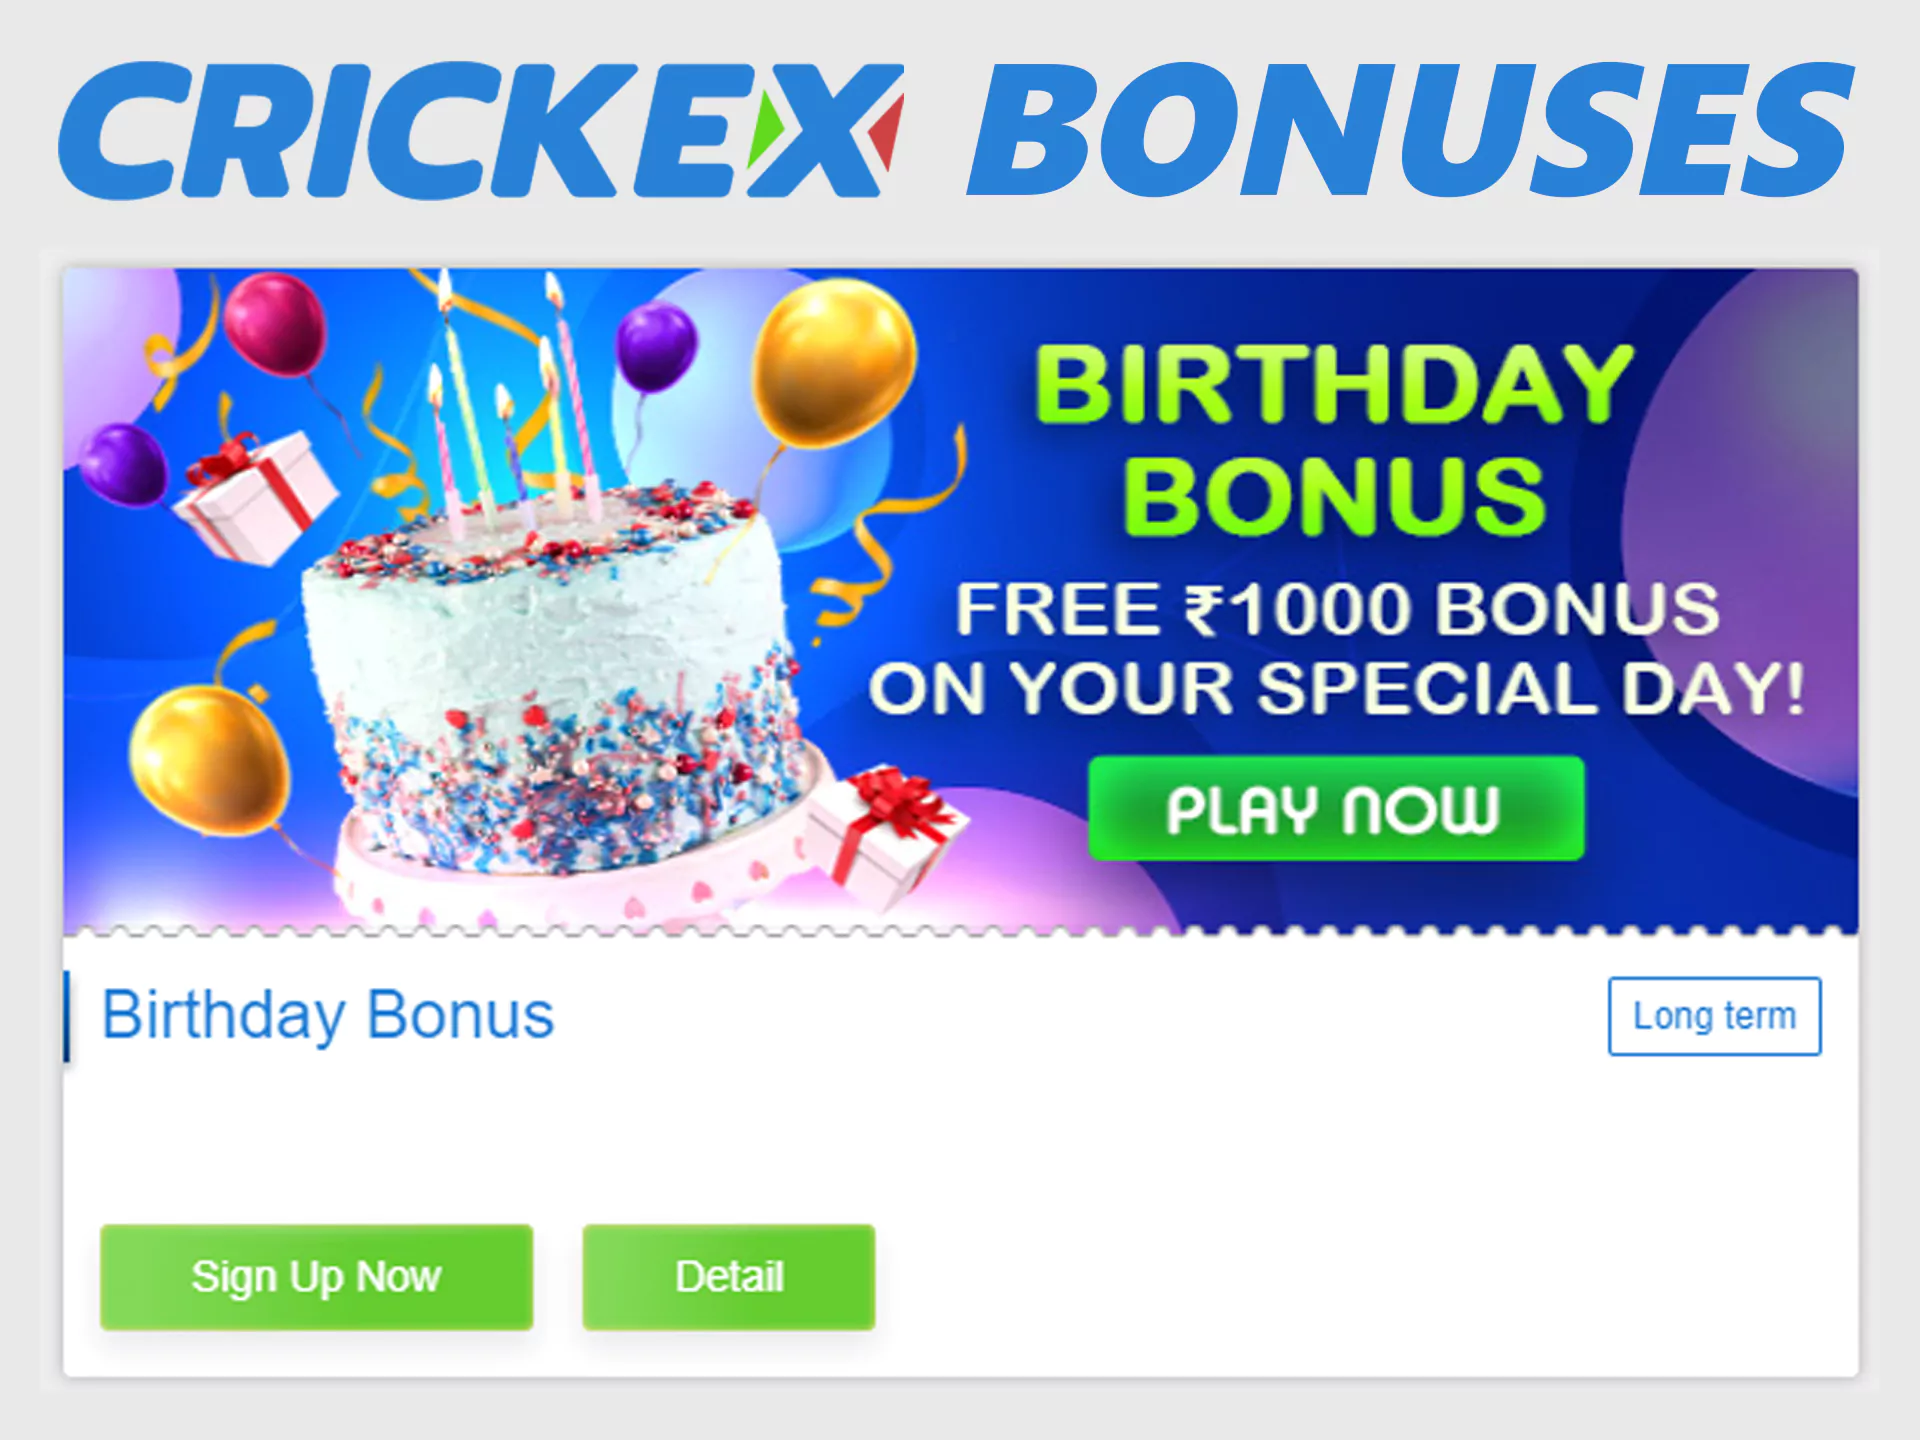 Get bonuses on your birthday at Crickex.